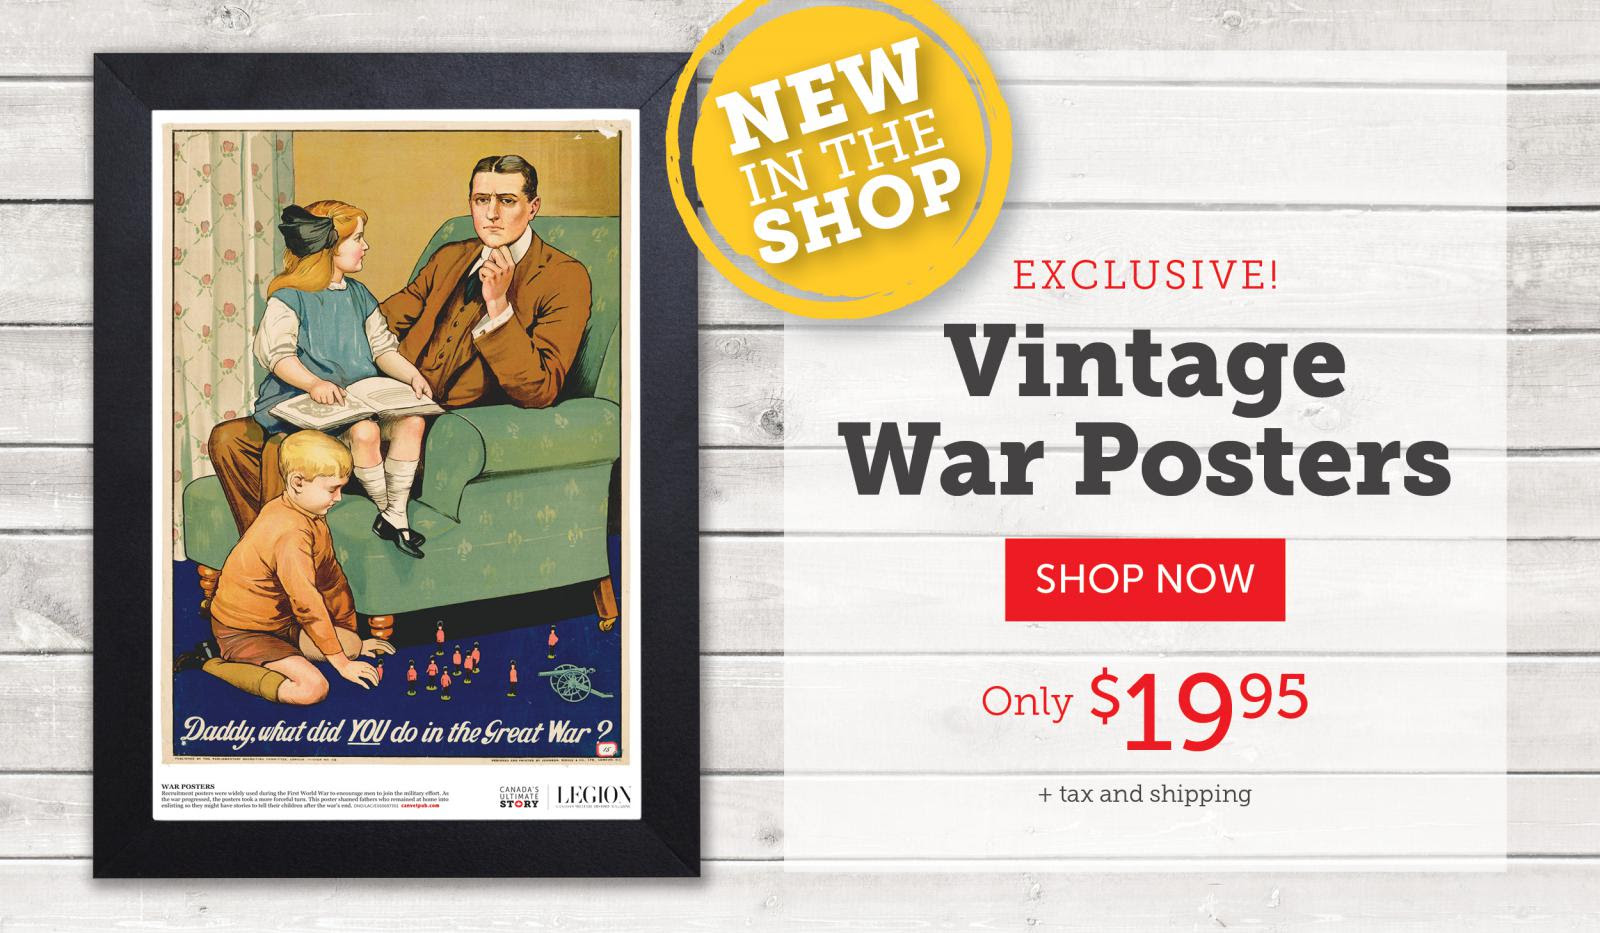 Vintage War Posters!